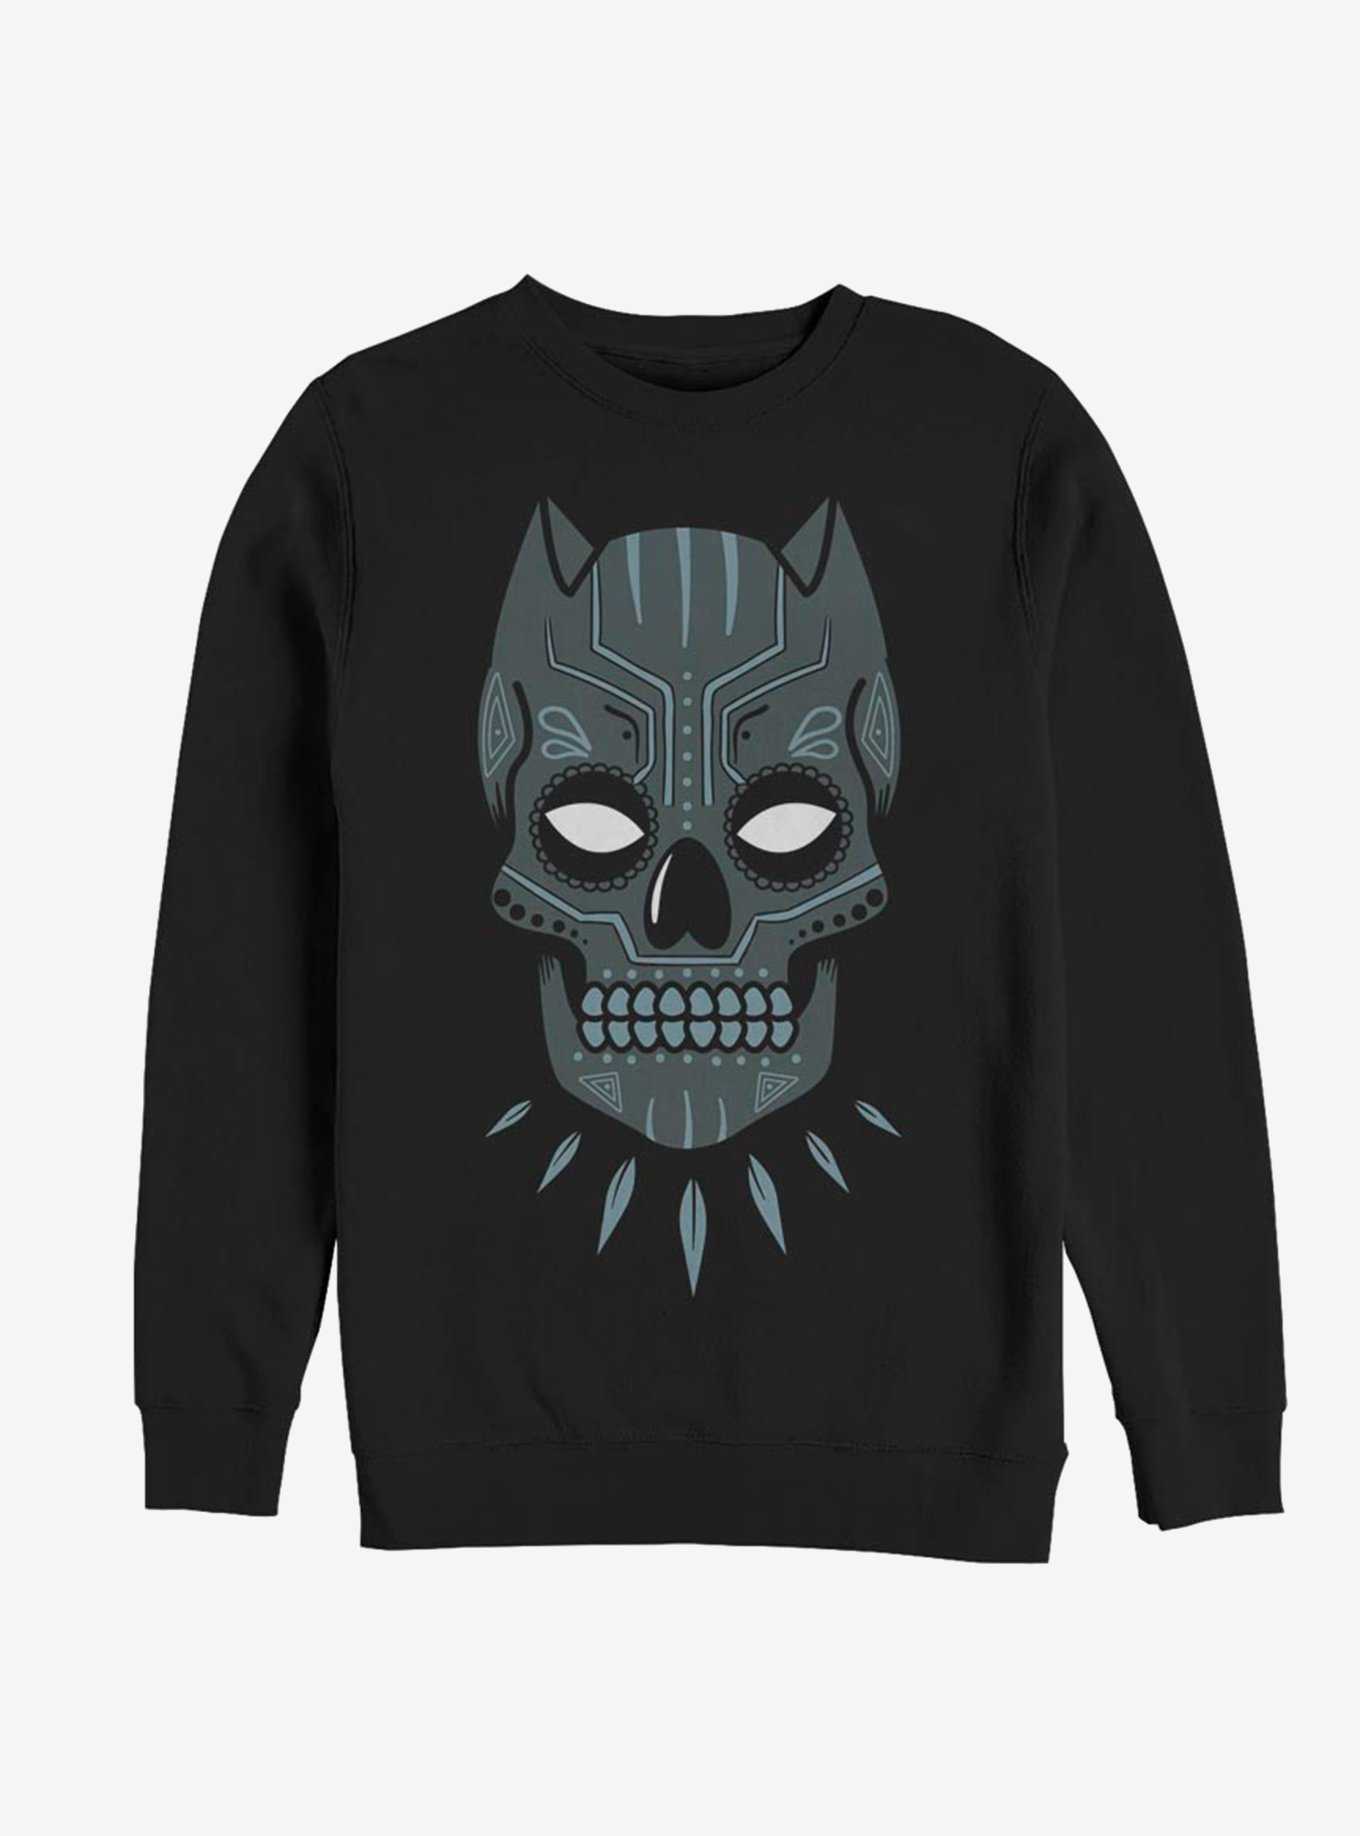 Marvel Black Panther Sugar Skull Sweatshirt, , hi-res